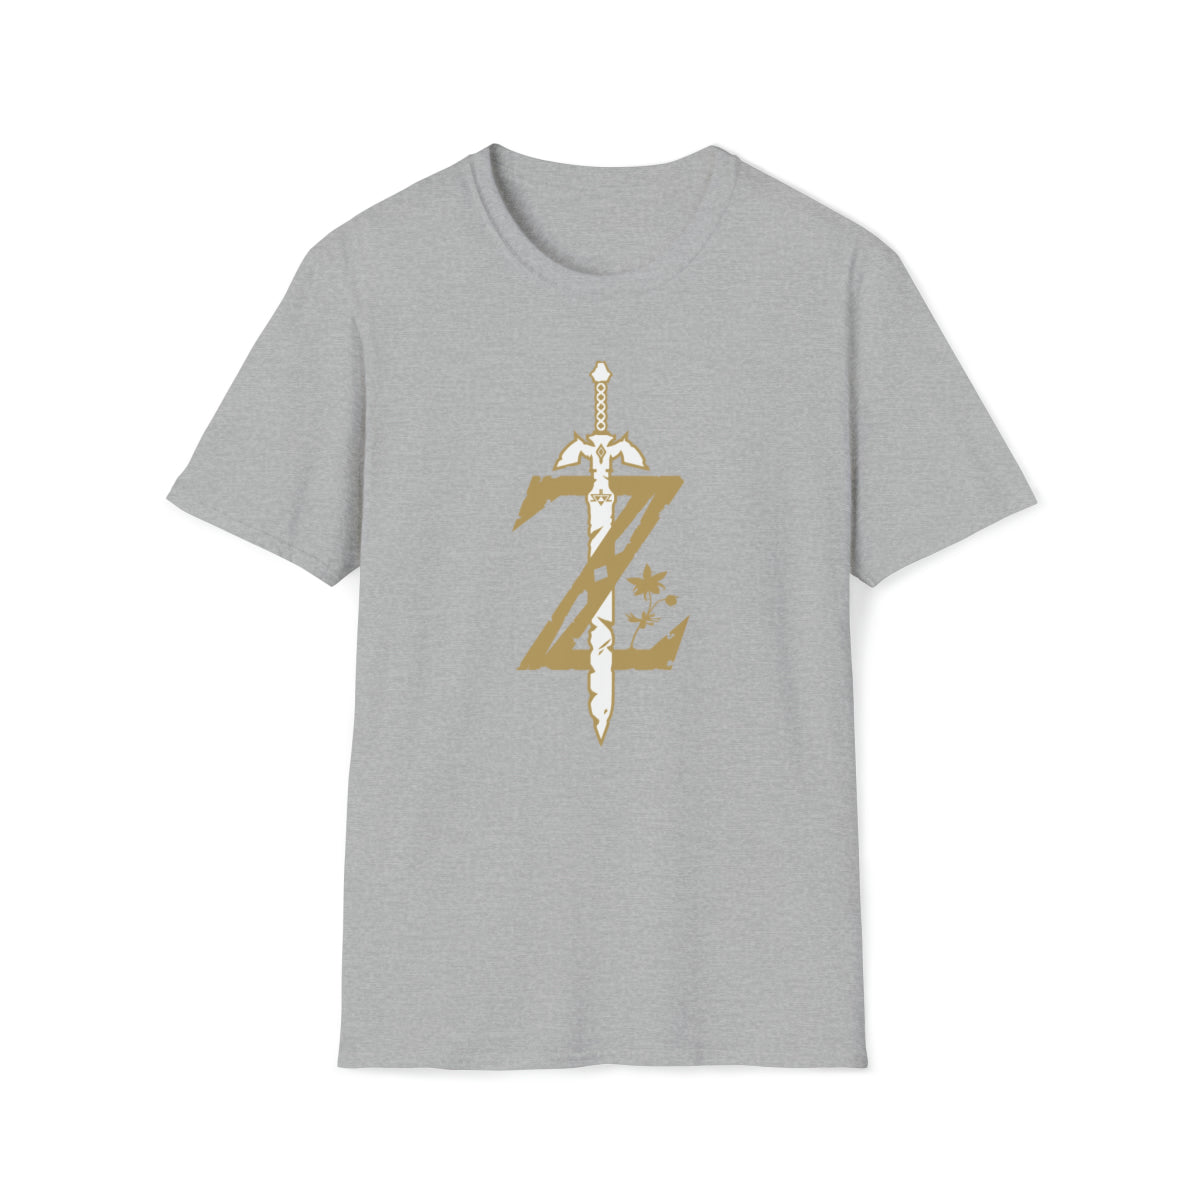 Zelda and the Master Sword - Short Sleeve Unisex Soft Style T-Shirt